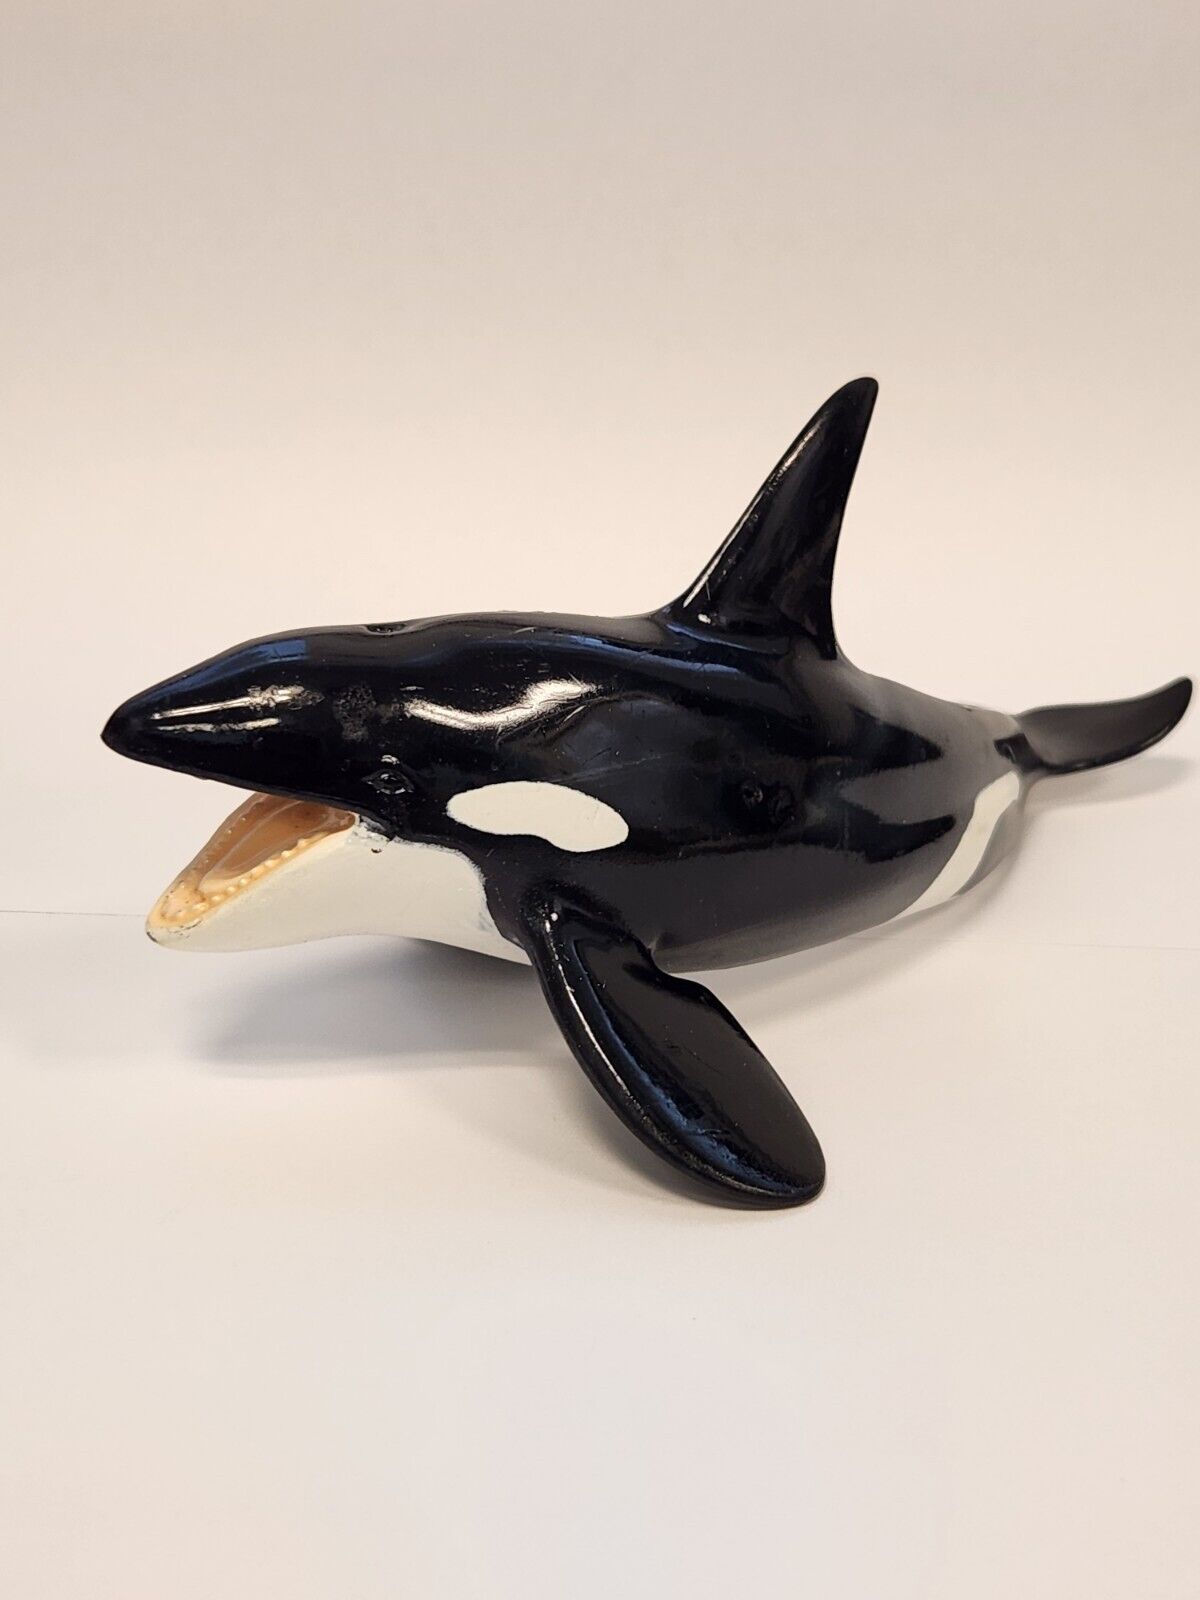 VTG SCHLEICH Figurine Orca Killer Whale Figure Toy Ocean Sea Marine Mammal 2004